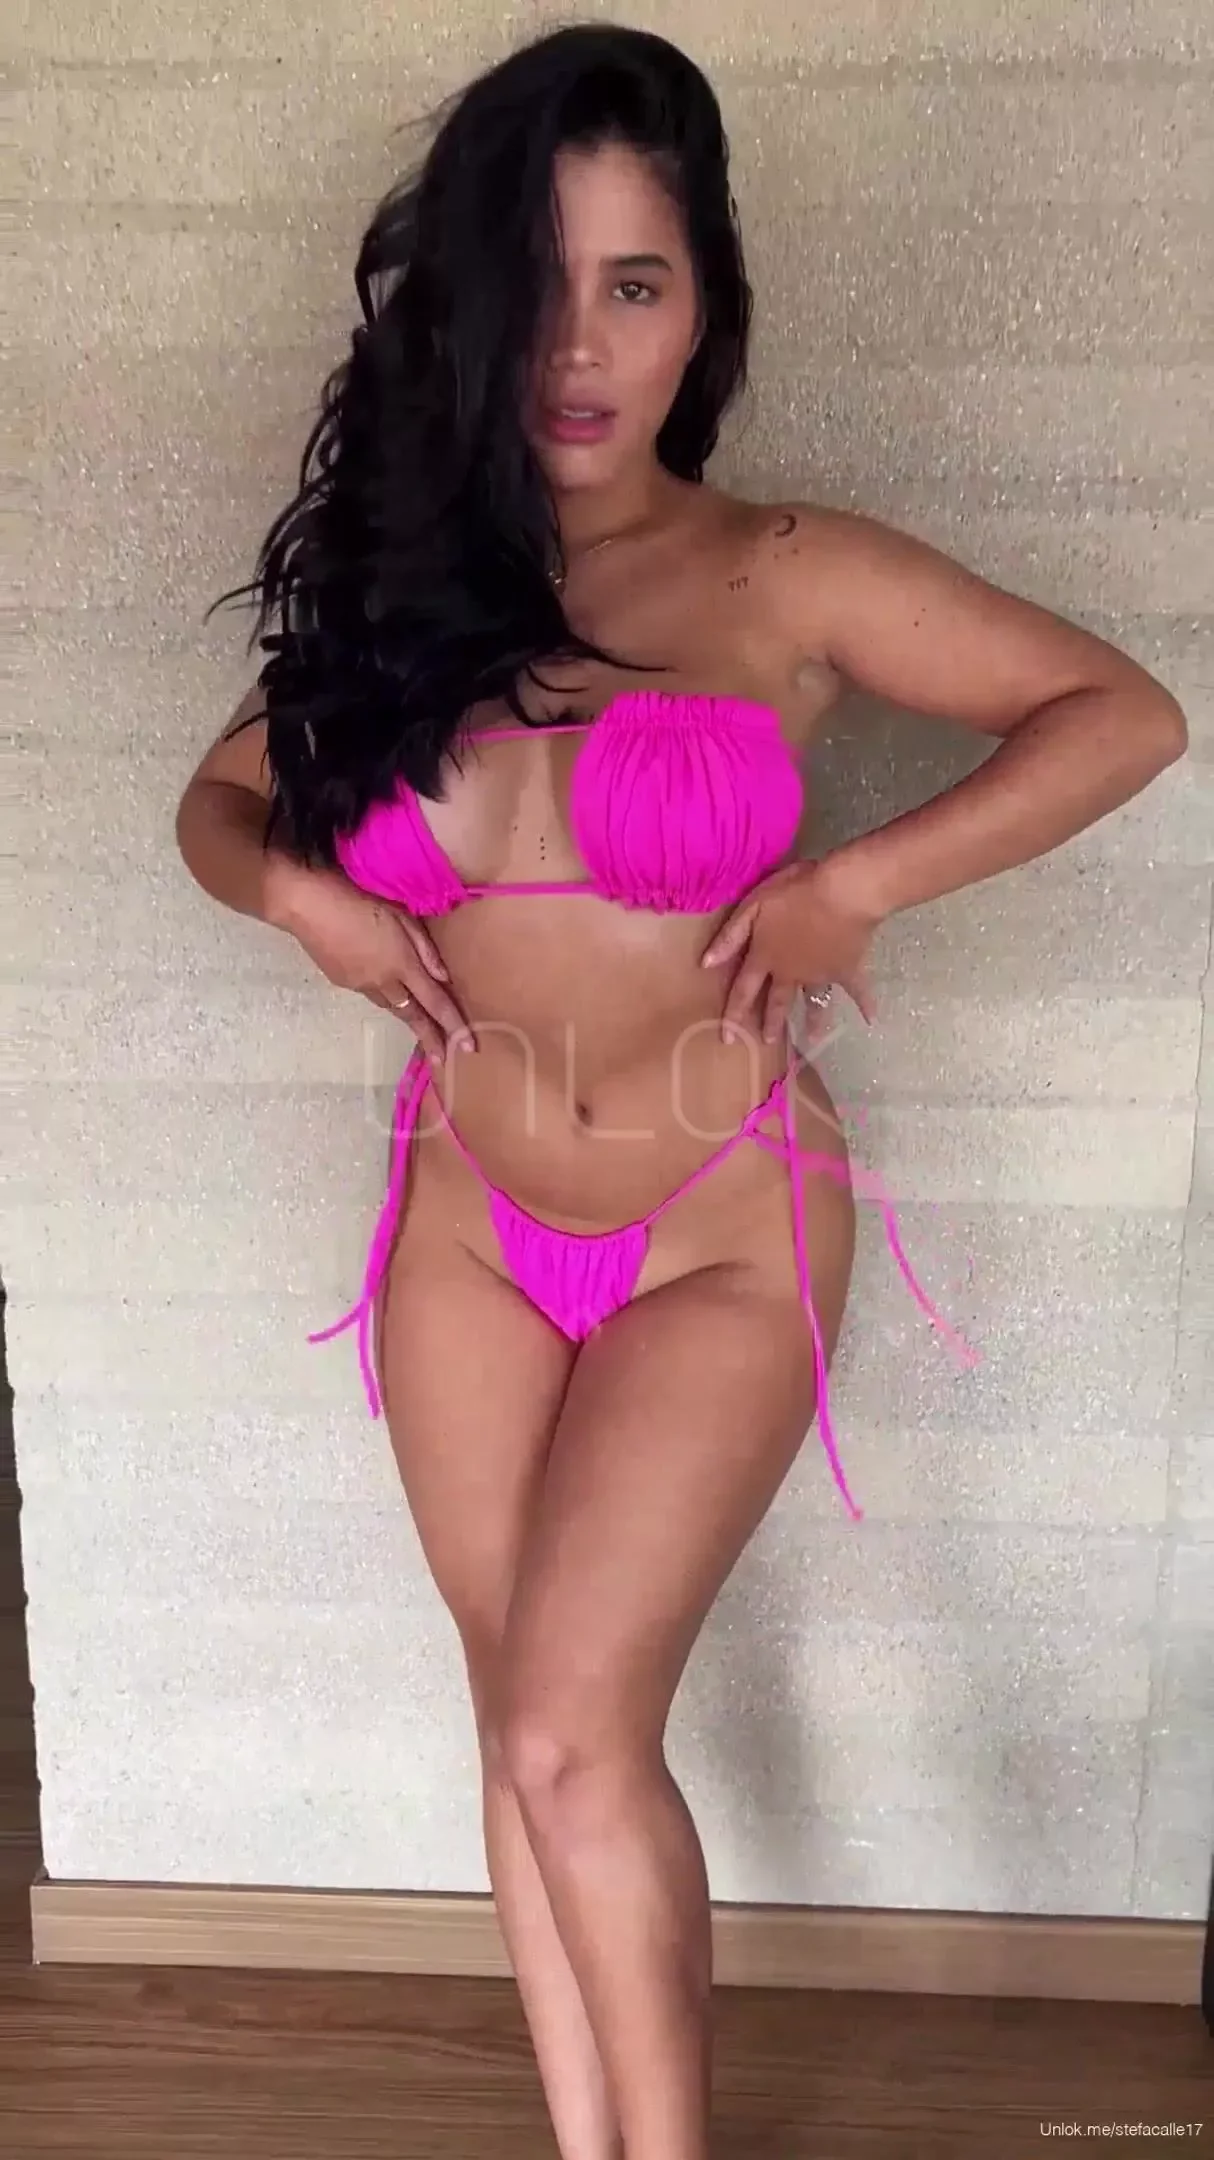 Latina in amazing bikini dances and shows titties Video photo